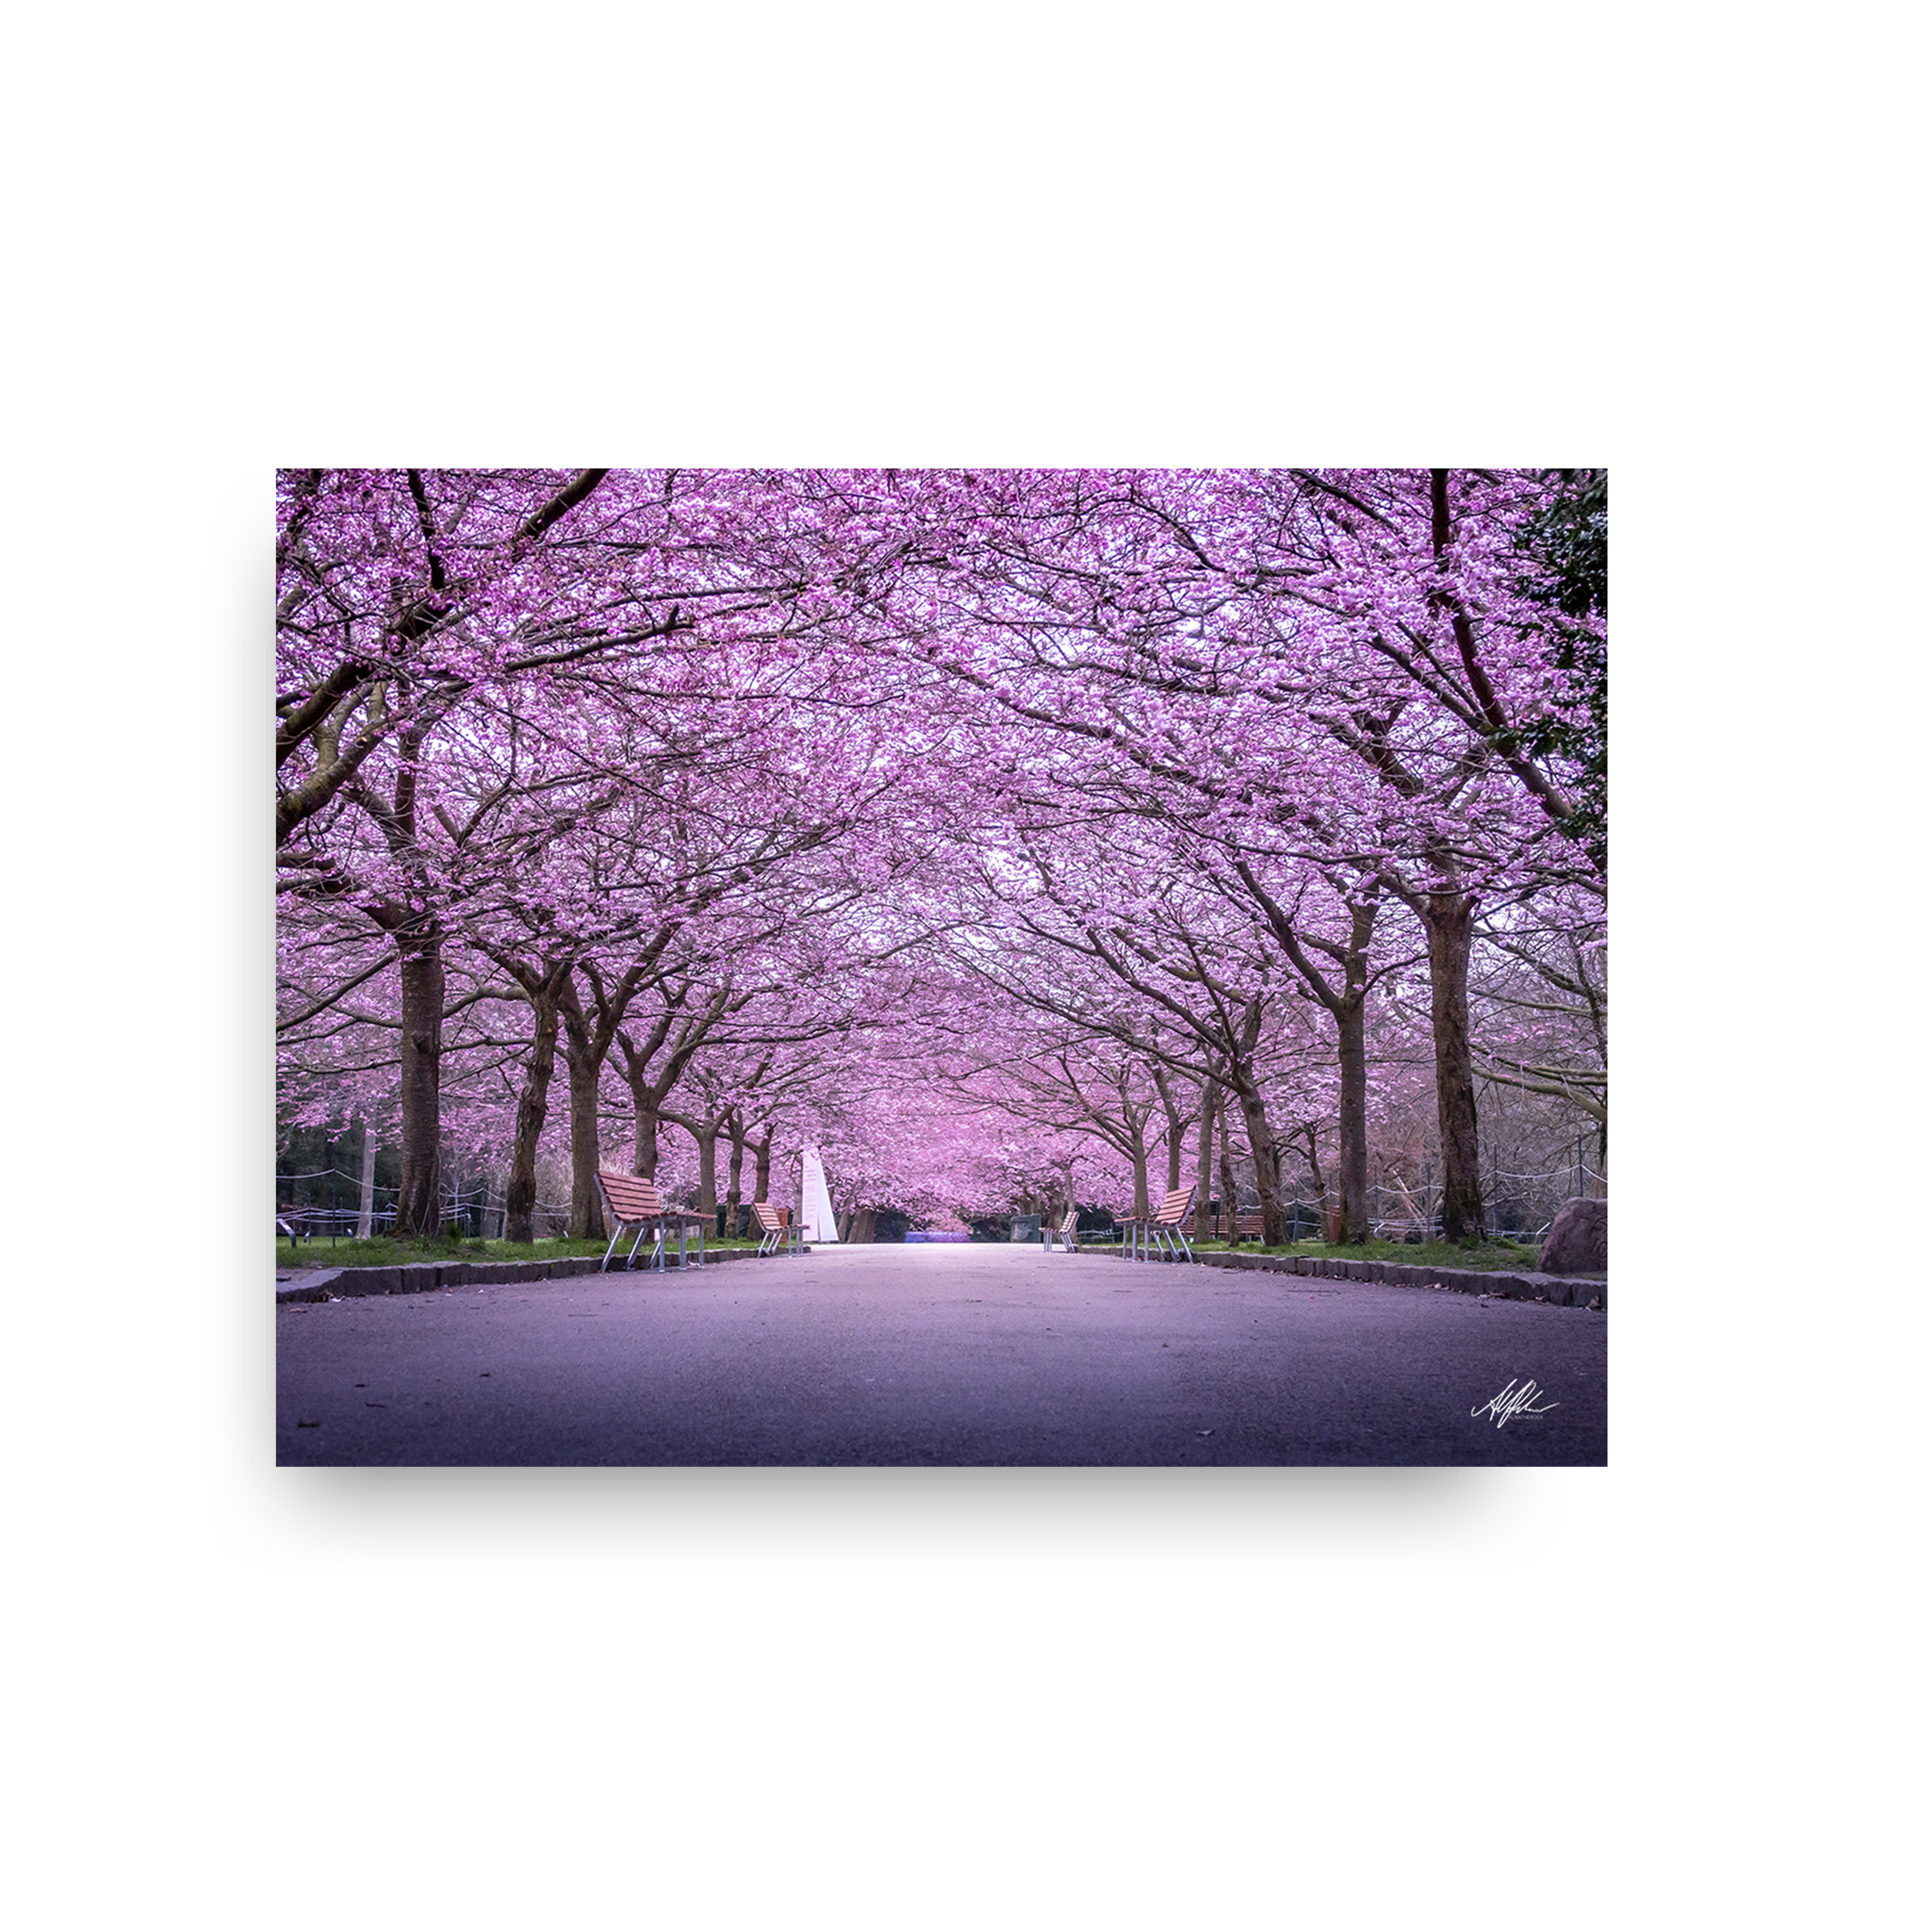 Kirschblüte - Sakura-Saison 2019 - Alantherock